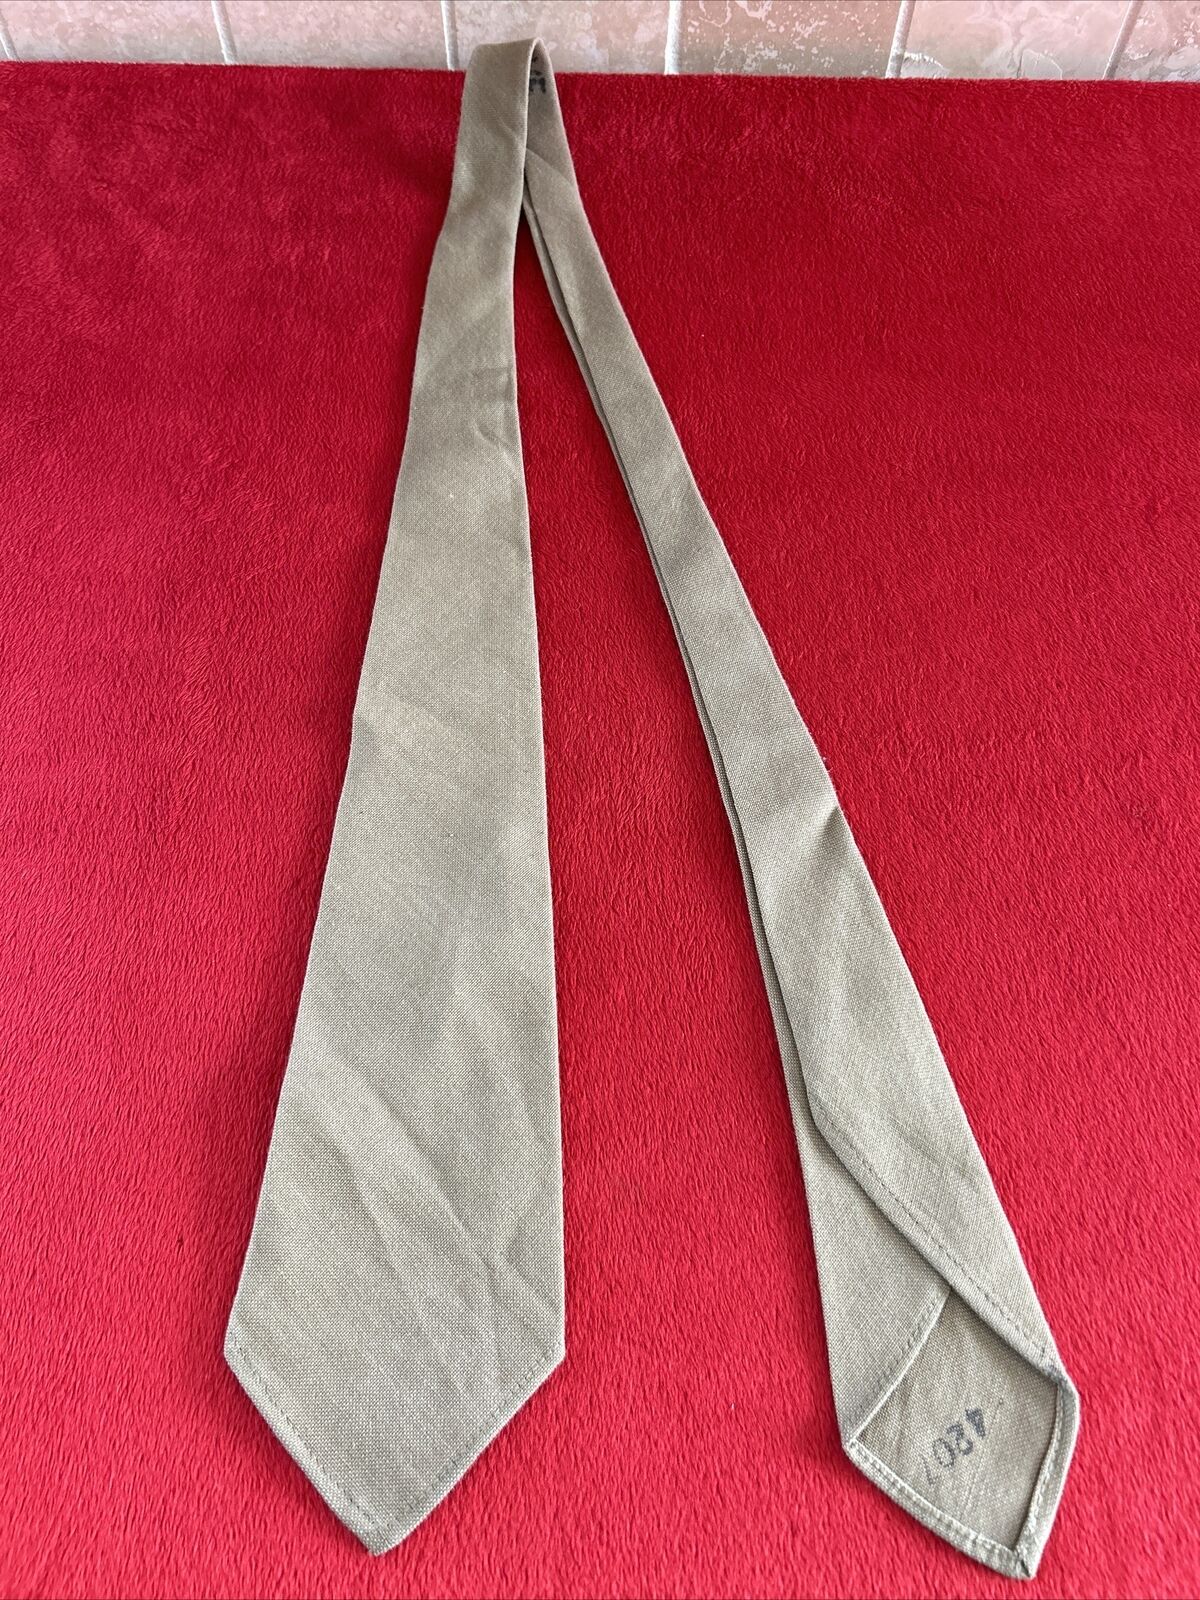 Original WW2 U.S. Army Enlisted Soldiers Khaki Uniform Neck Tie